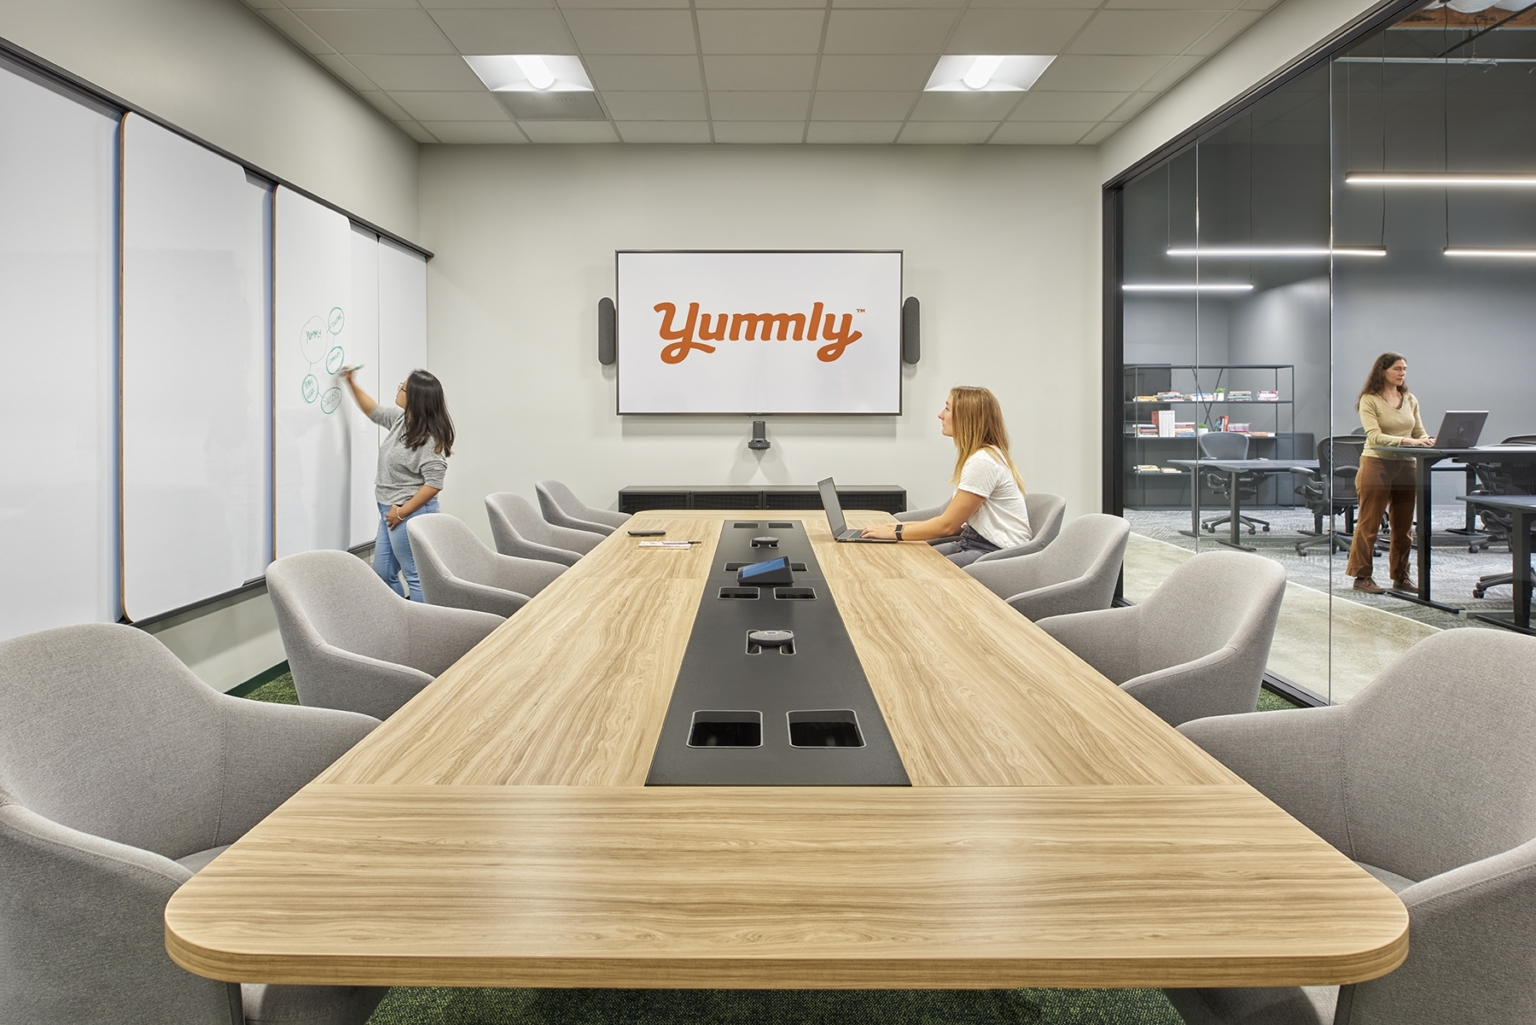 【Yummlyのオフィスデザイン】- カリフォルニア州, サンカルロスの会議/ミーティングスペース